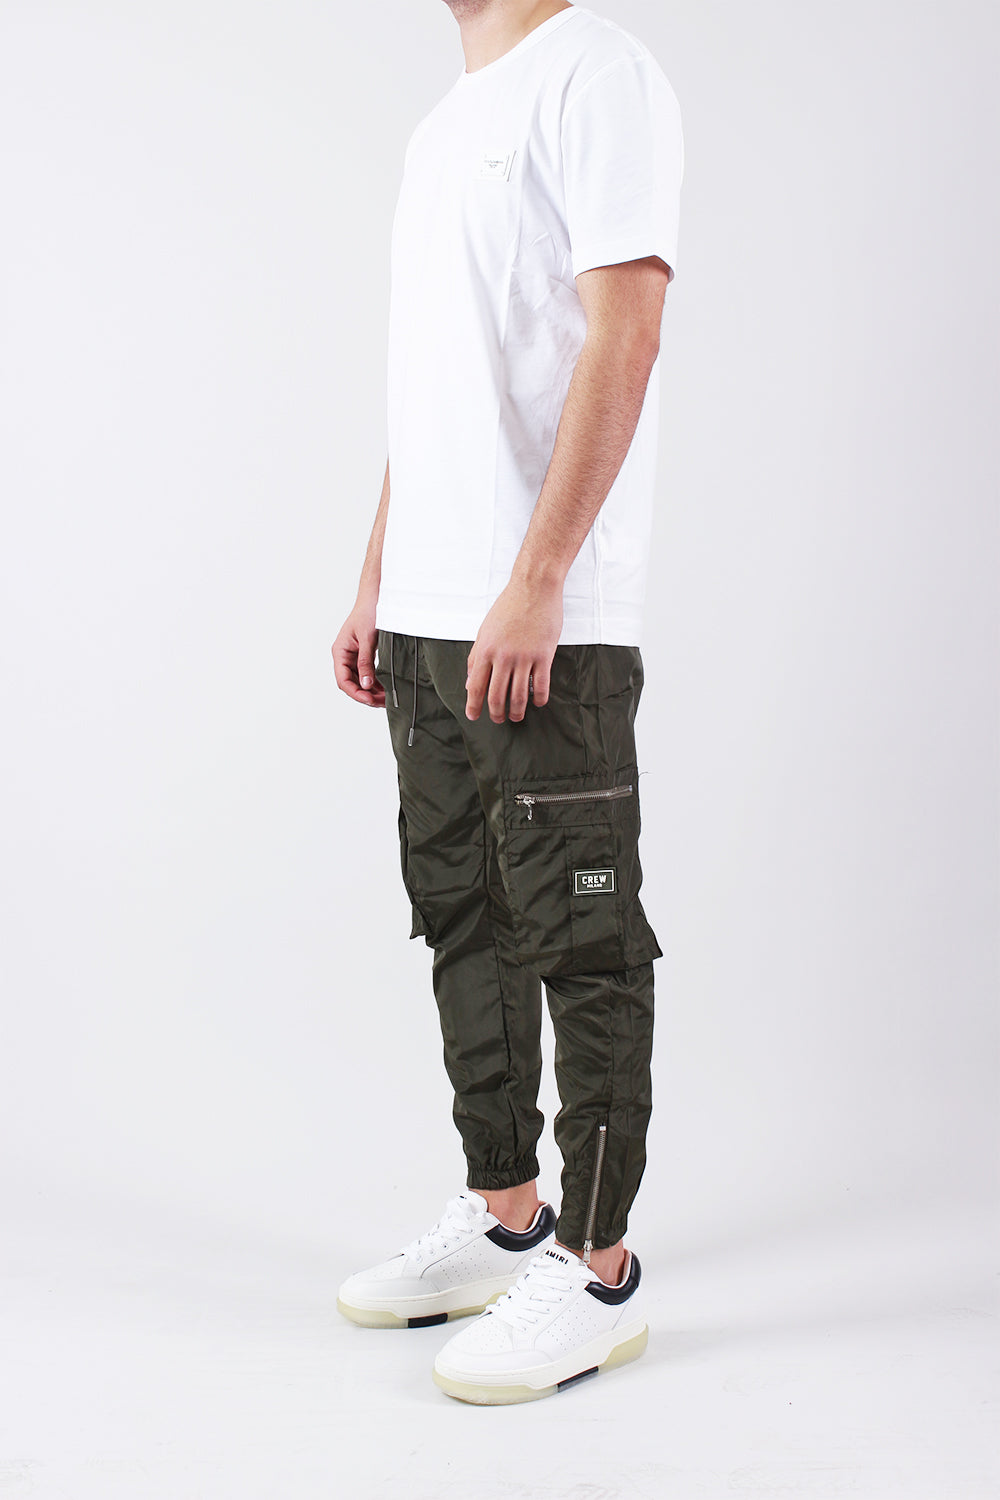 CREW Duo Premium Pockets Cargo Pants Green Olive